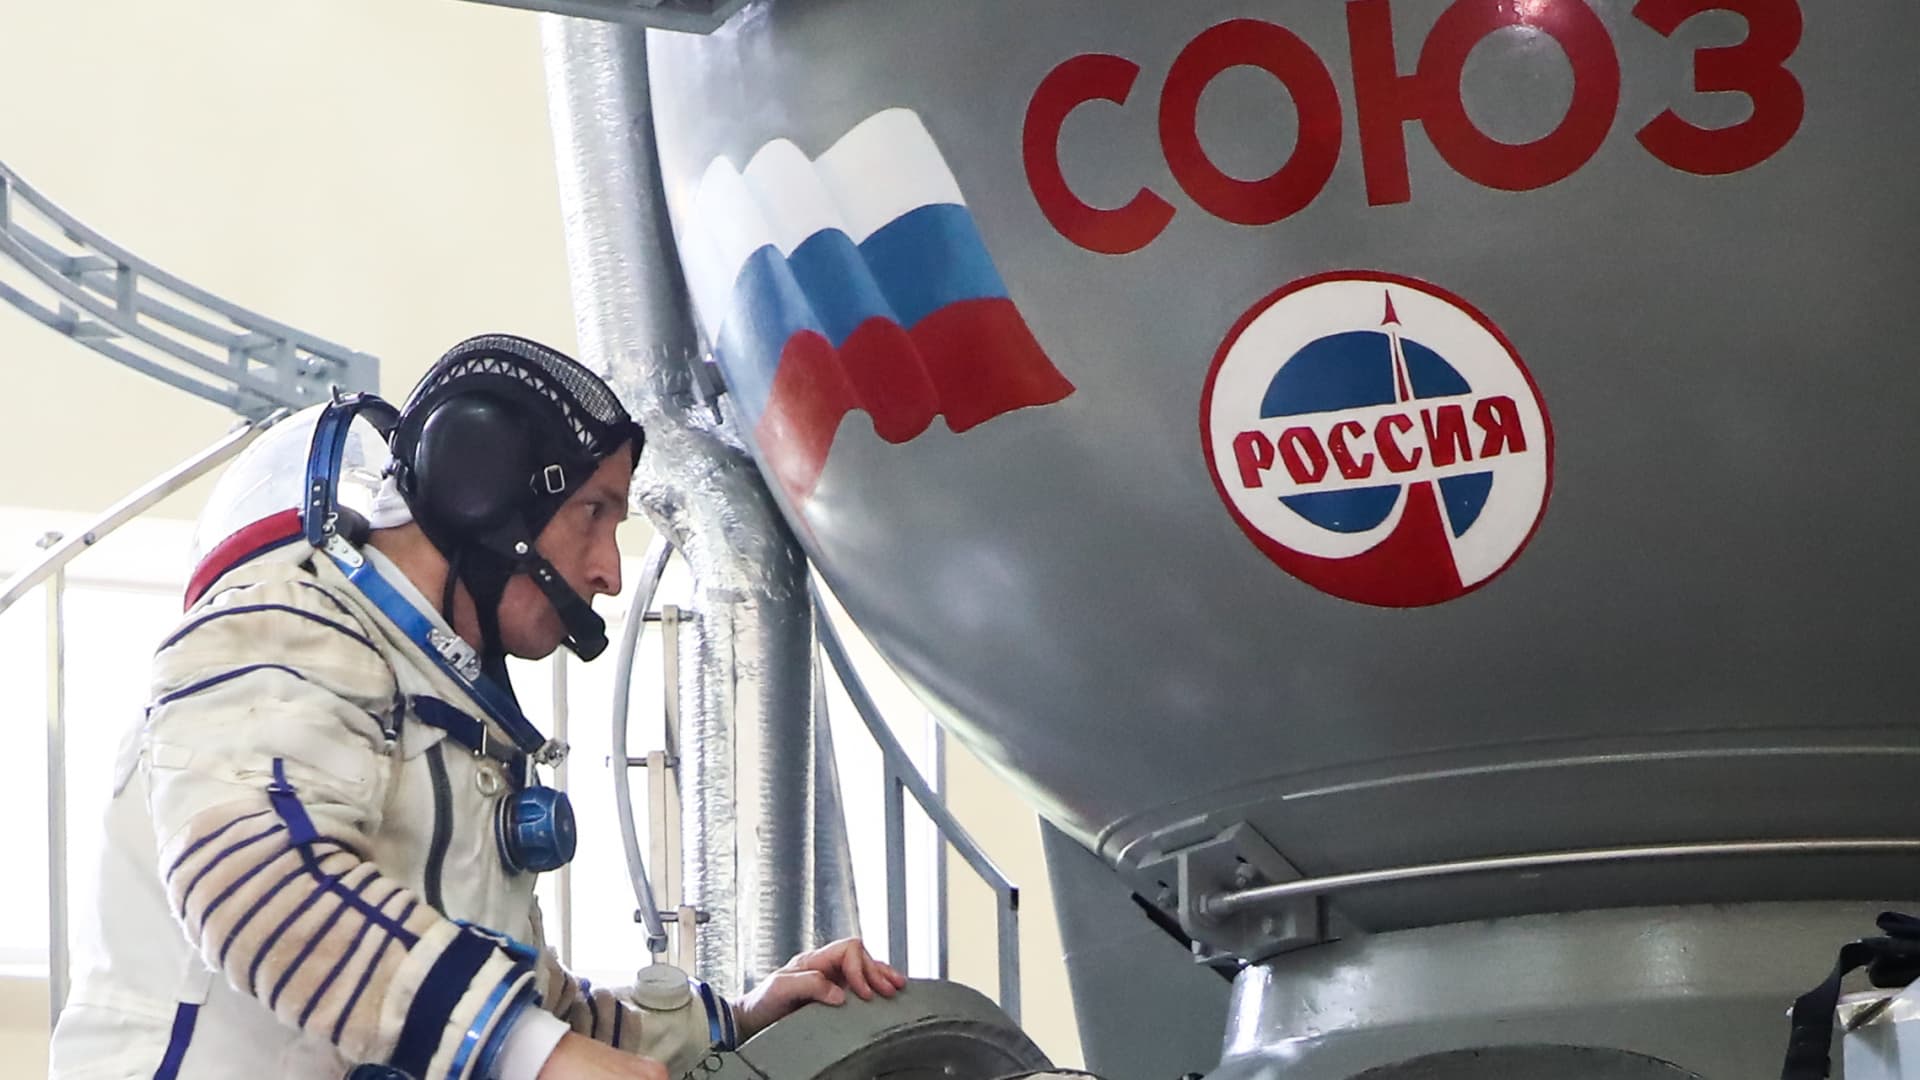 ISS Expedition 64 crew member, Russian cosmonaut Sergey Ryzhikov takes part in a training session at the Yuri Gagarin Cosmonaut Training Center in Zvyozdny Gorodok [Star City], Moscow Region.